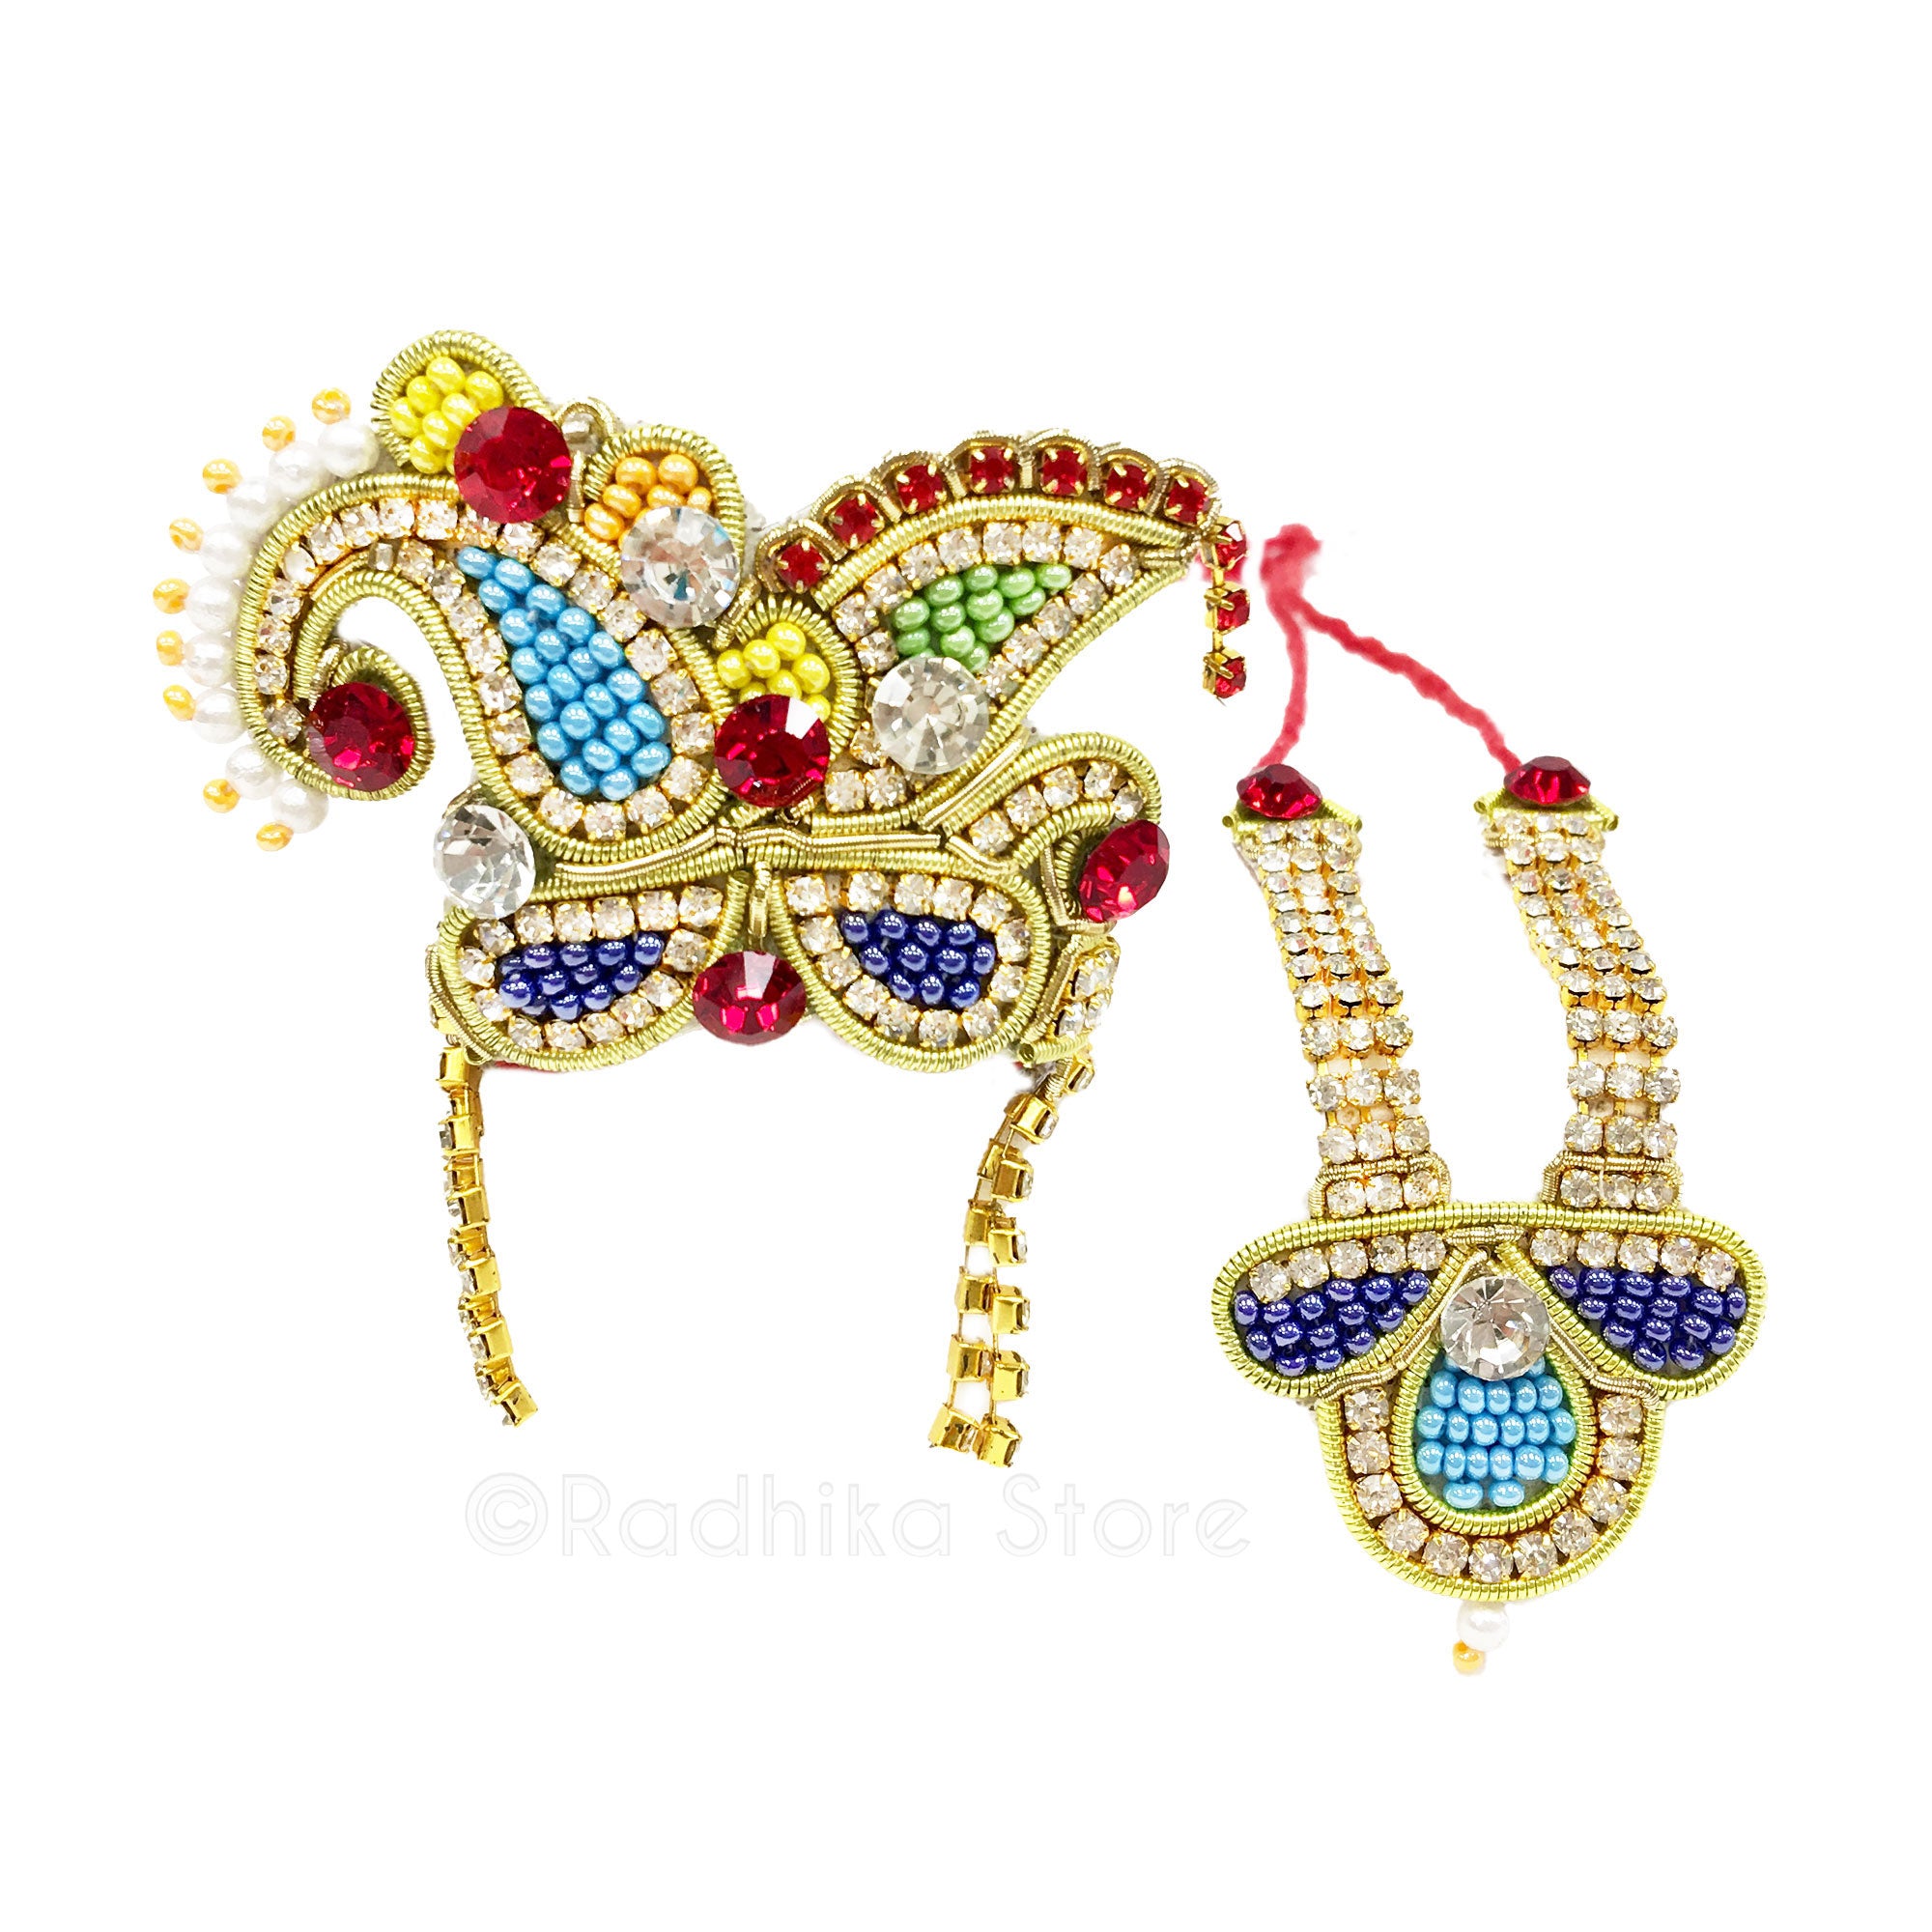 Prayag - Seed Bead Deity Crown and Necklace Set